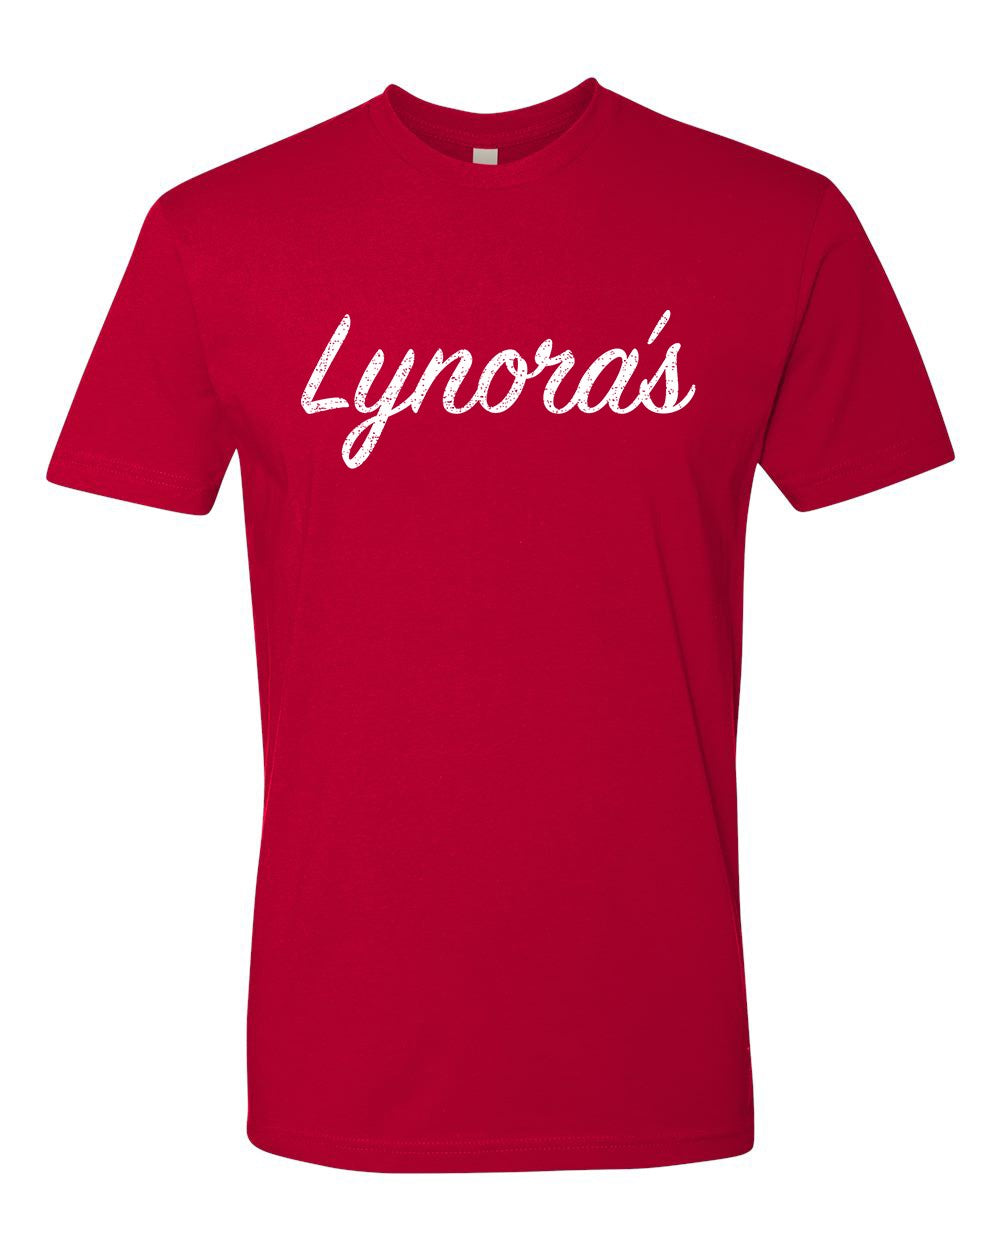 Men's: Lynora's T-Shirt